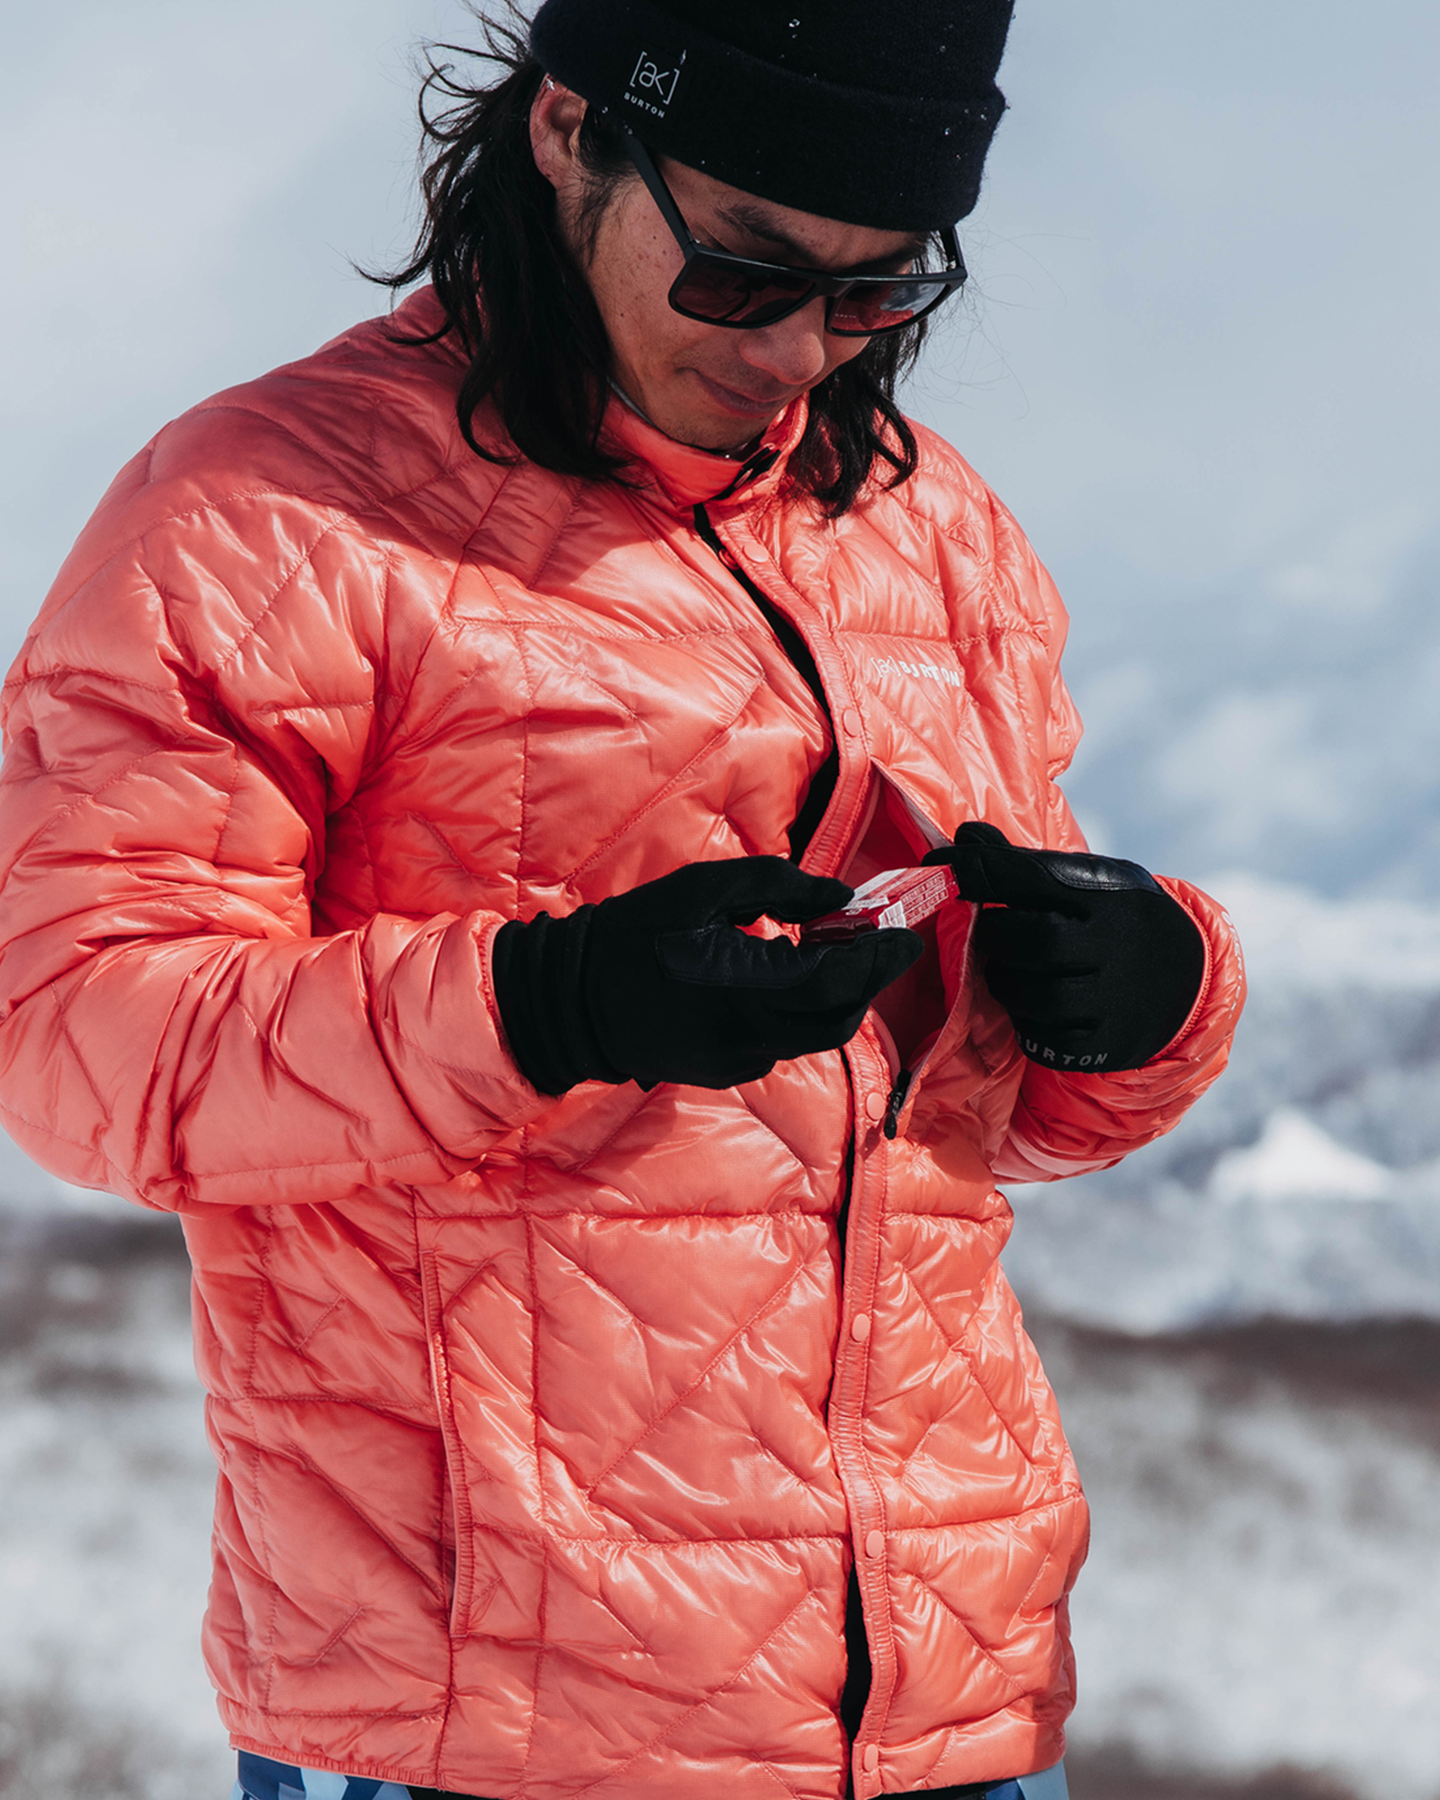 Burton Men's [ak]® Baker Ultralight Down Jacket - Reef Pink Jackets - Trojan Wake Ski Snow